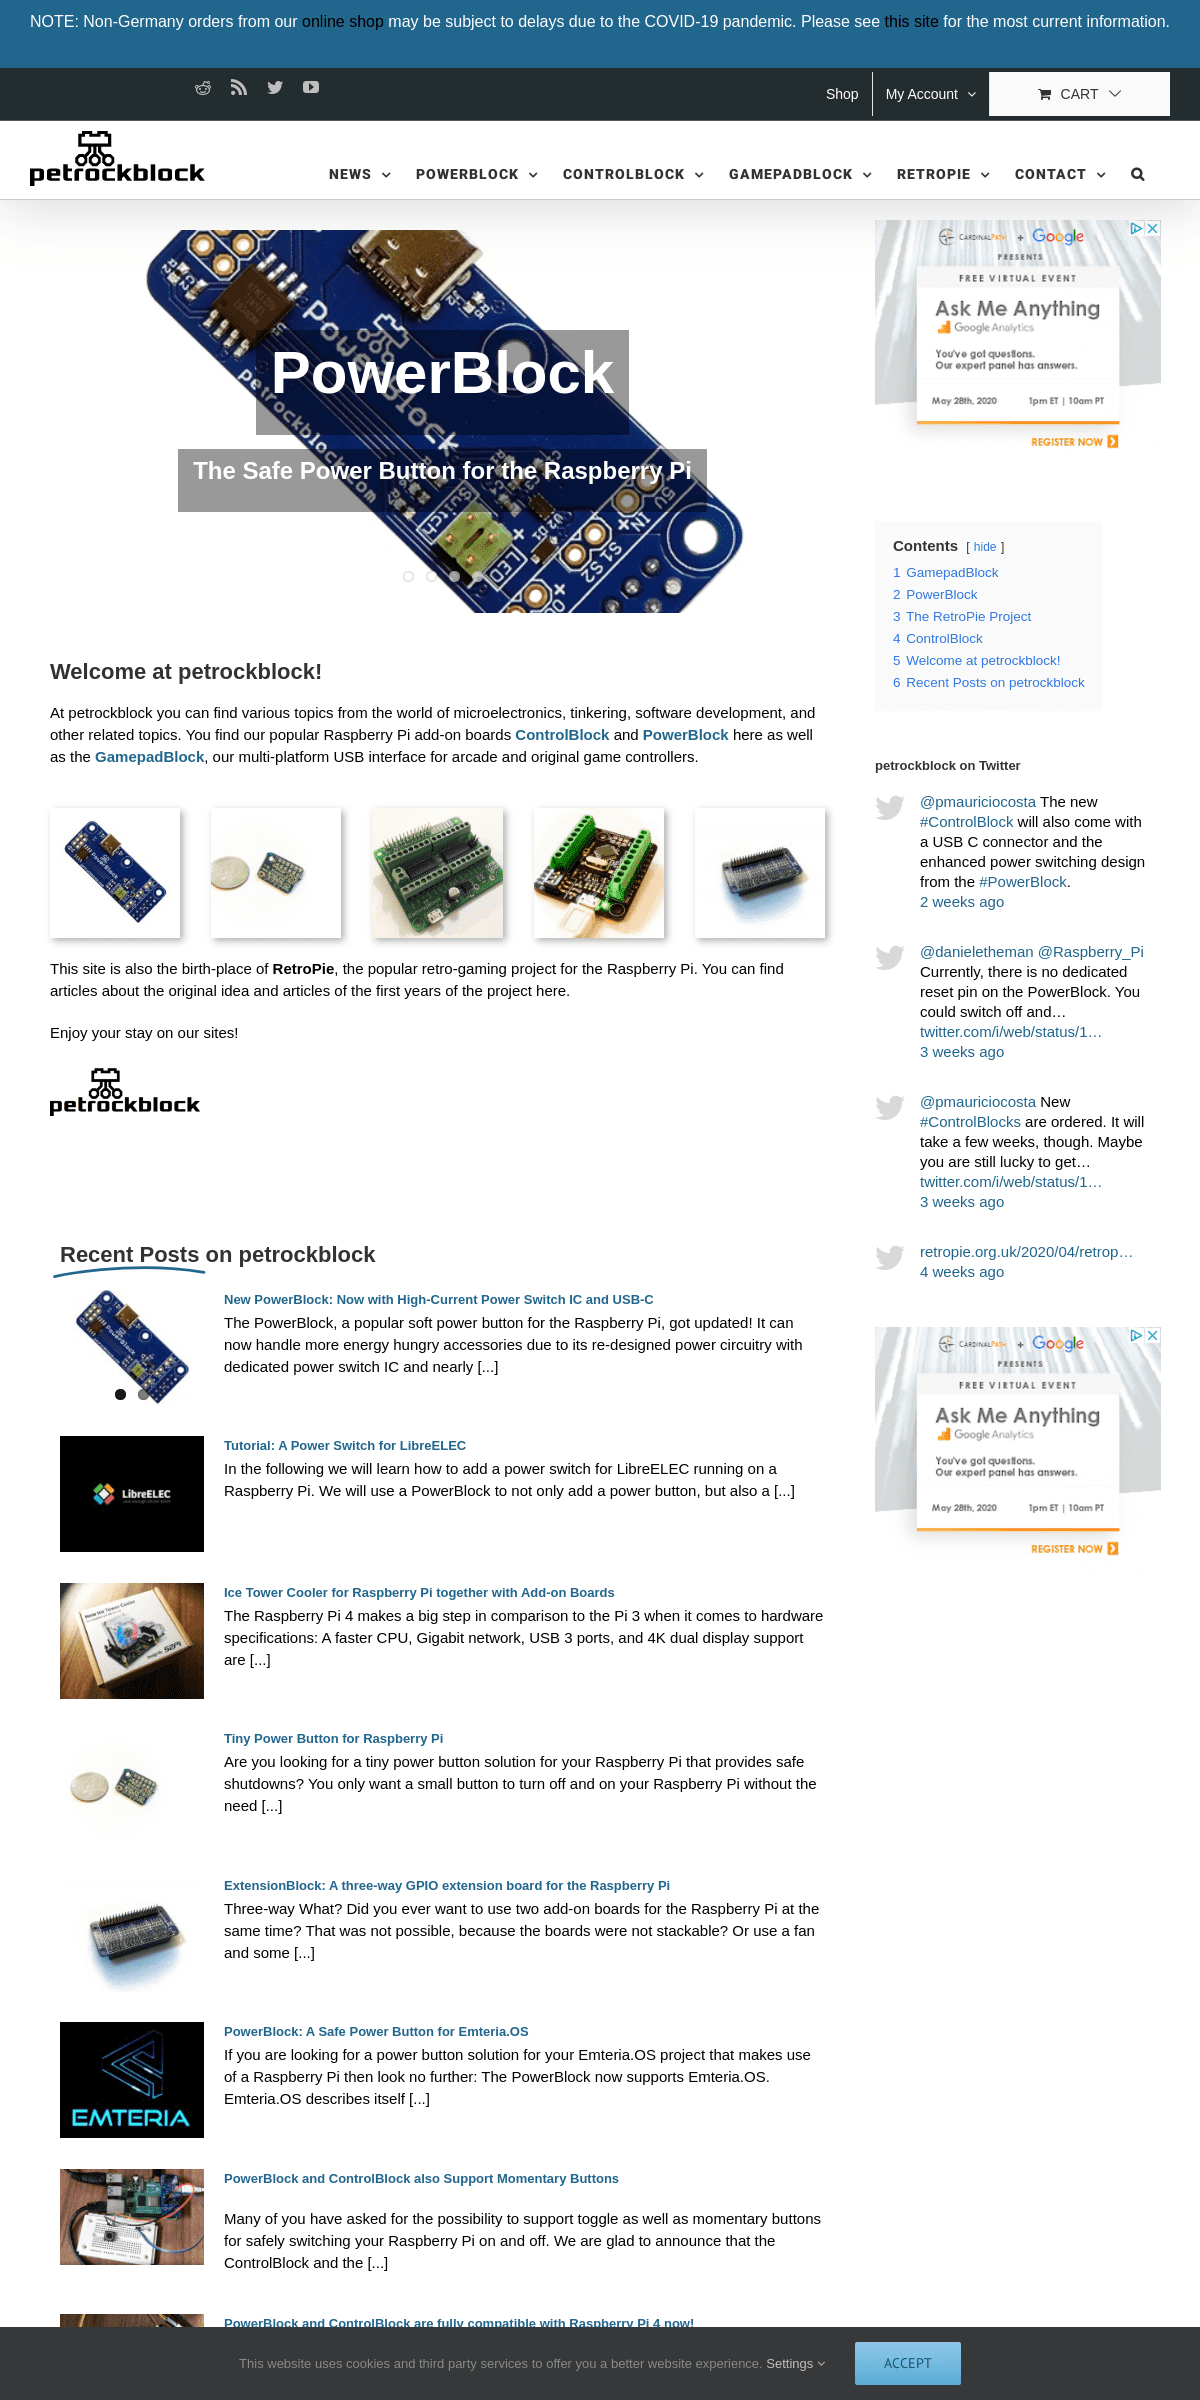 A complete backup of petrockblock.com